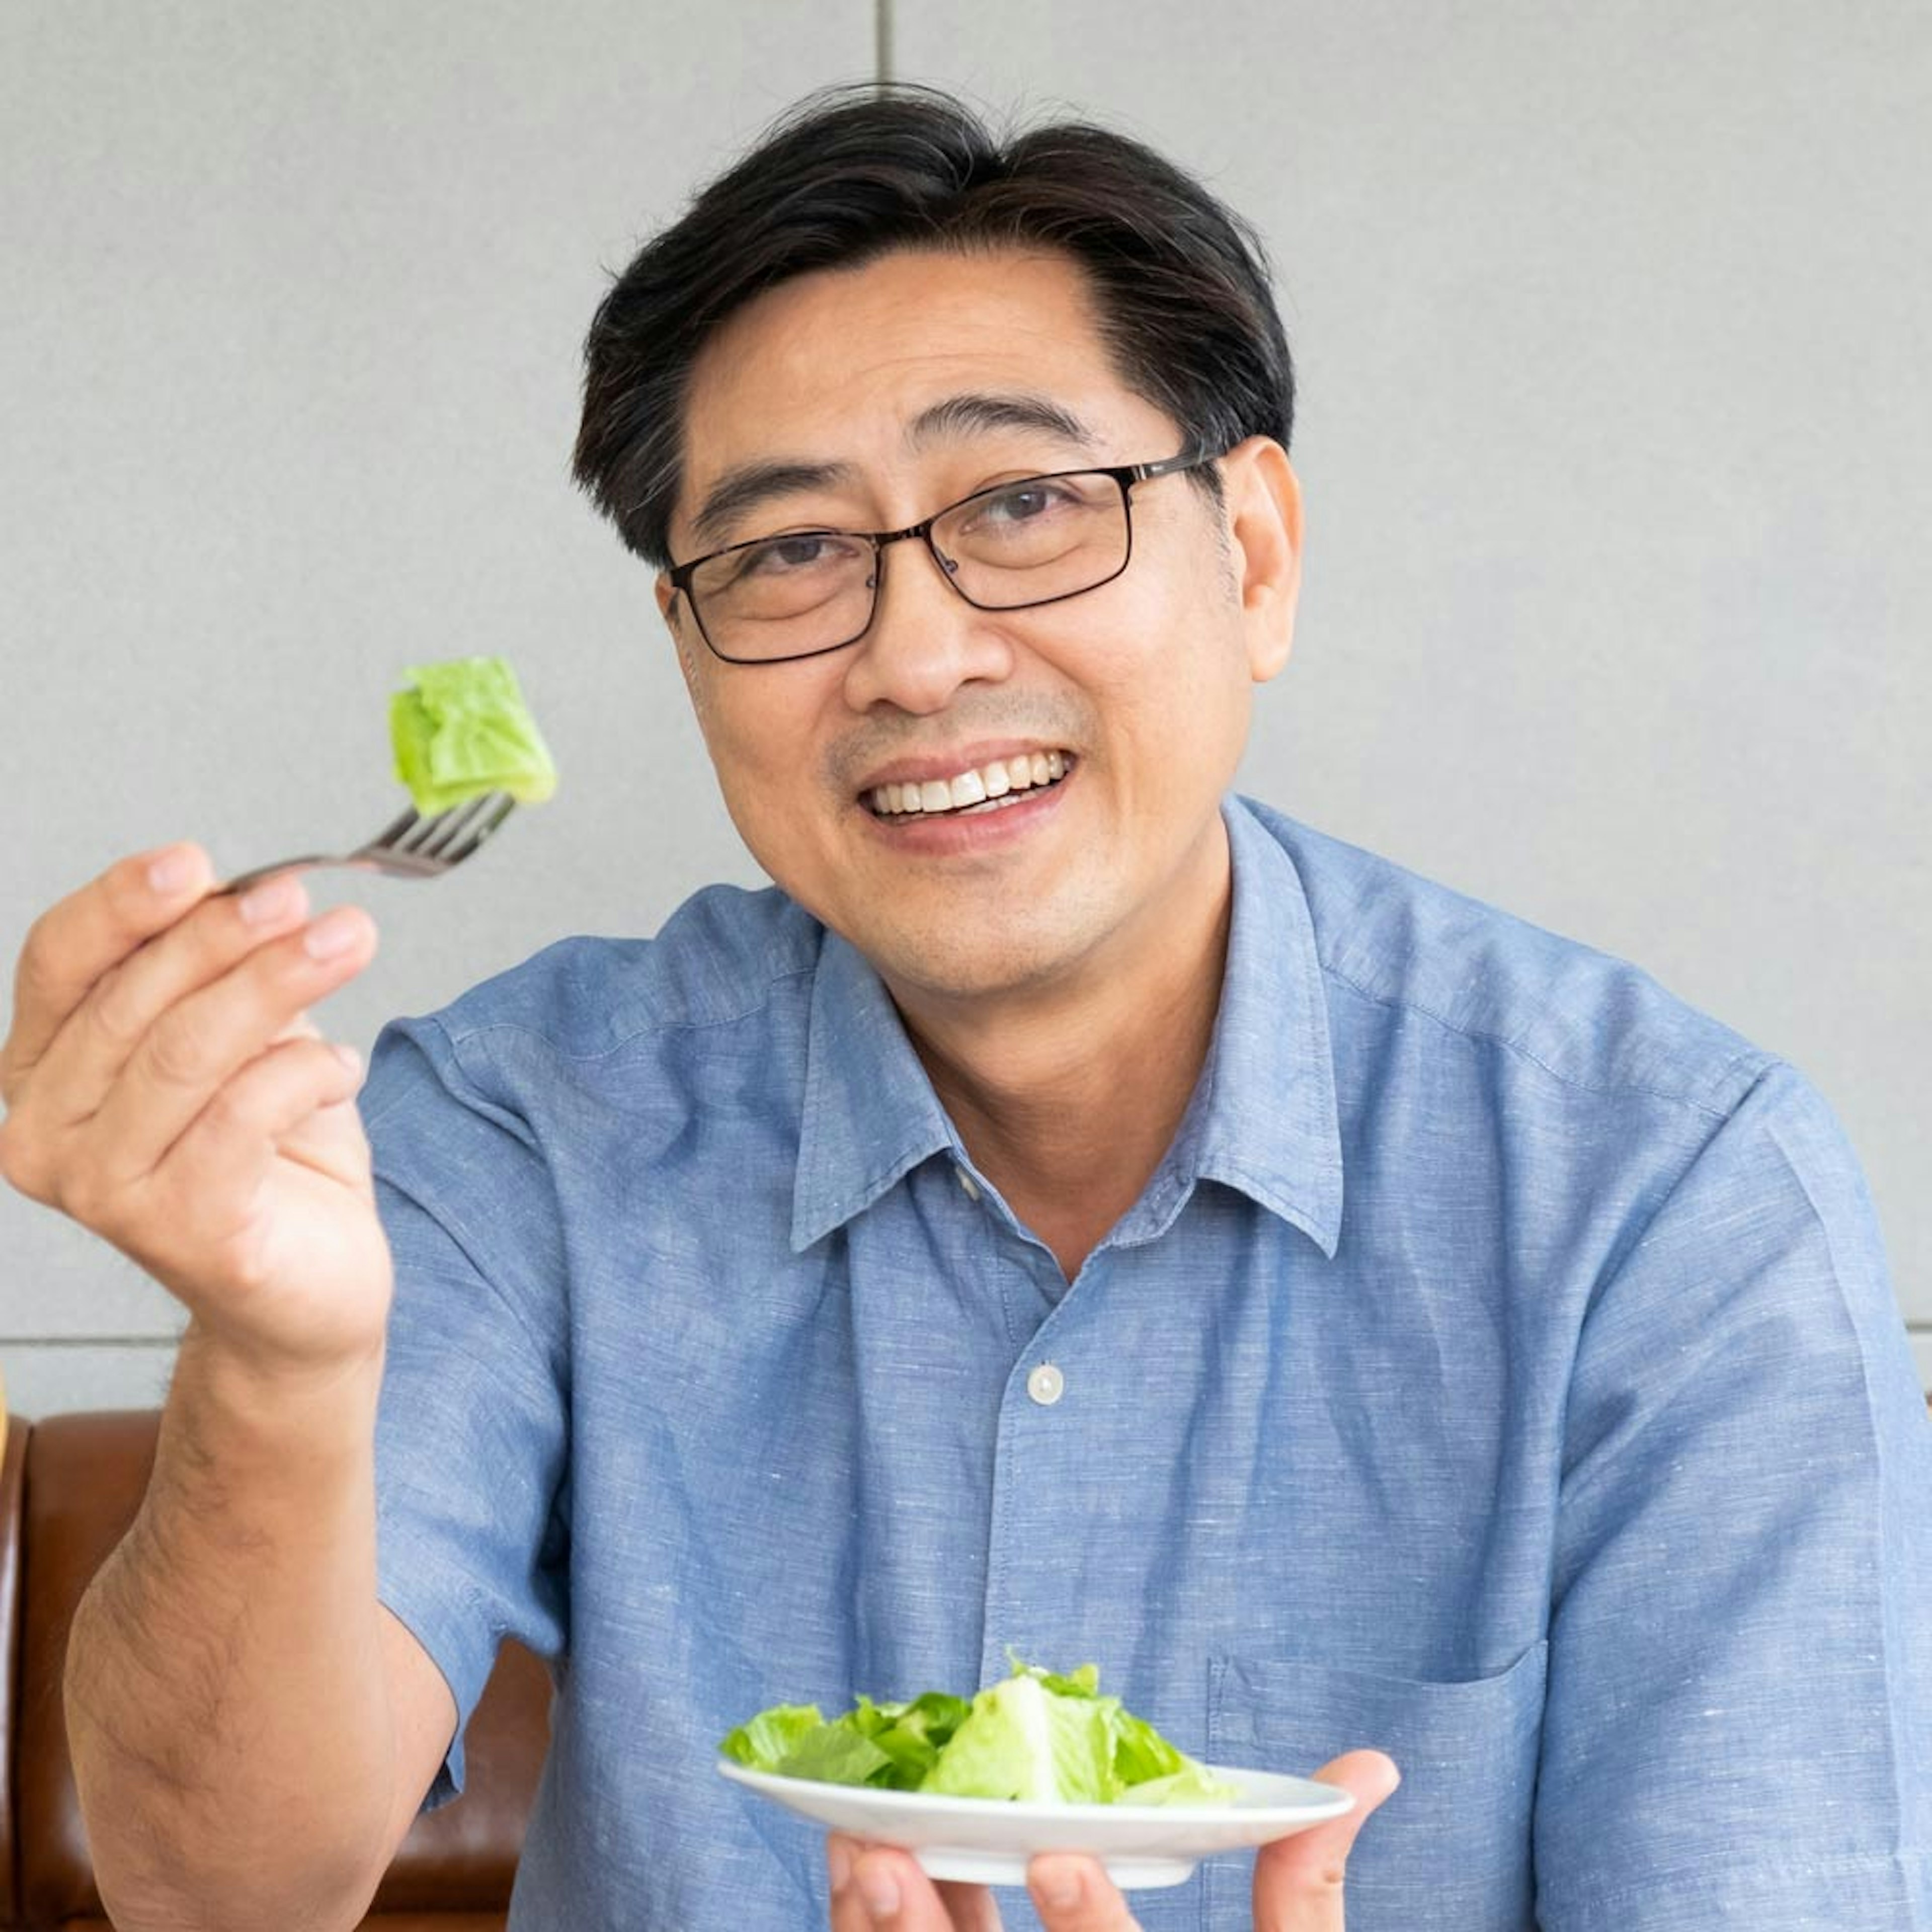 Mature man after restorative dentistry smiling while eating salad